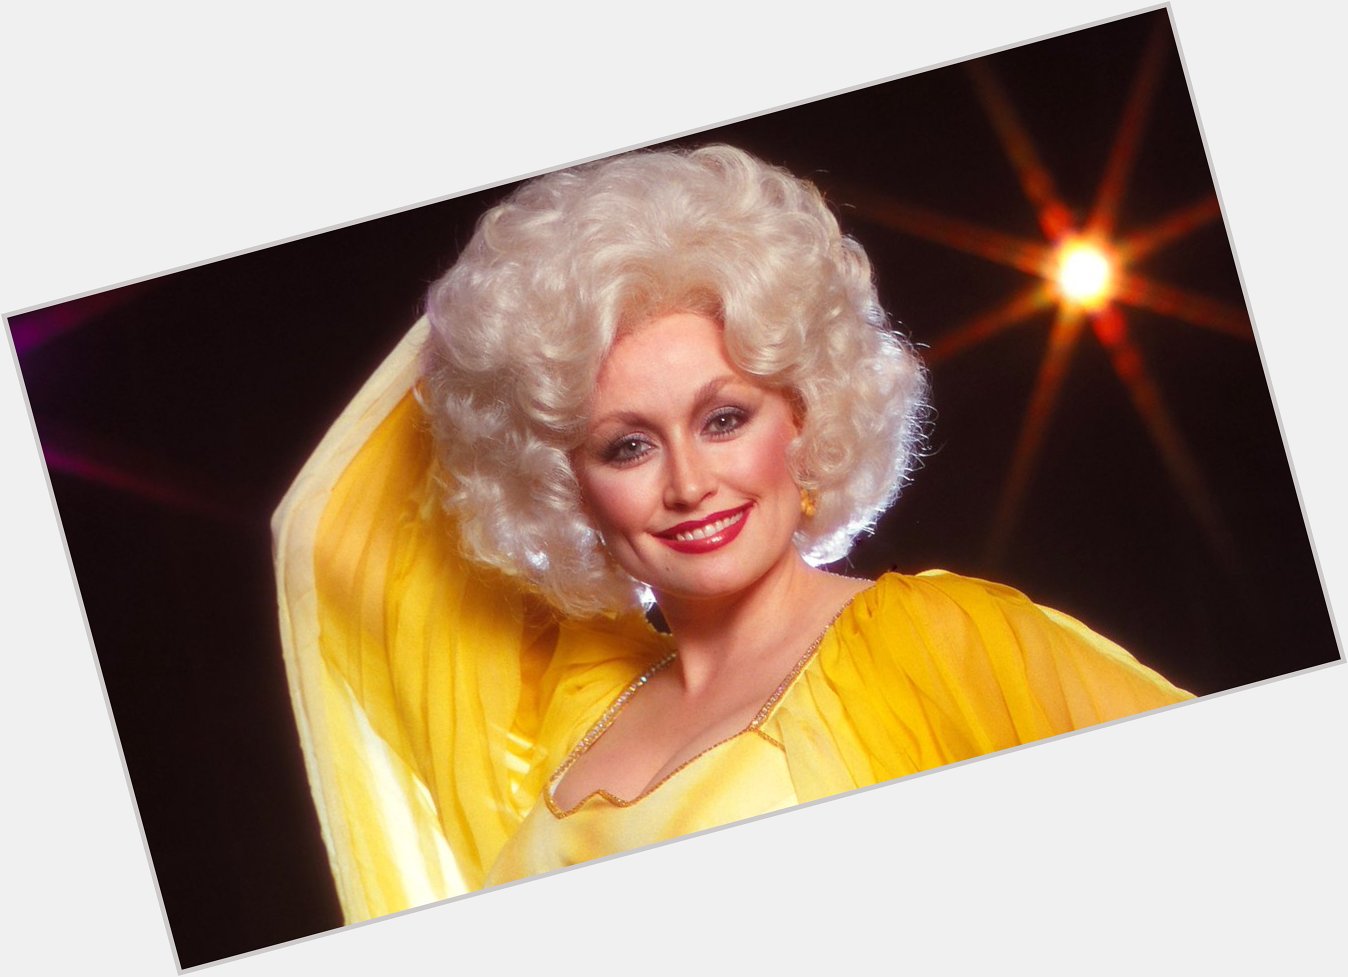 Happy 77th birthday to a true global icon, Dolly Parton! 